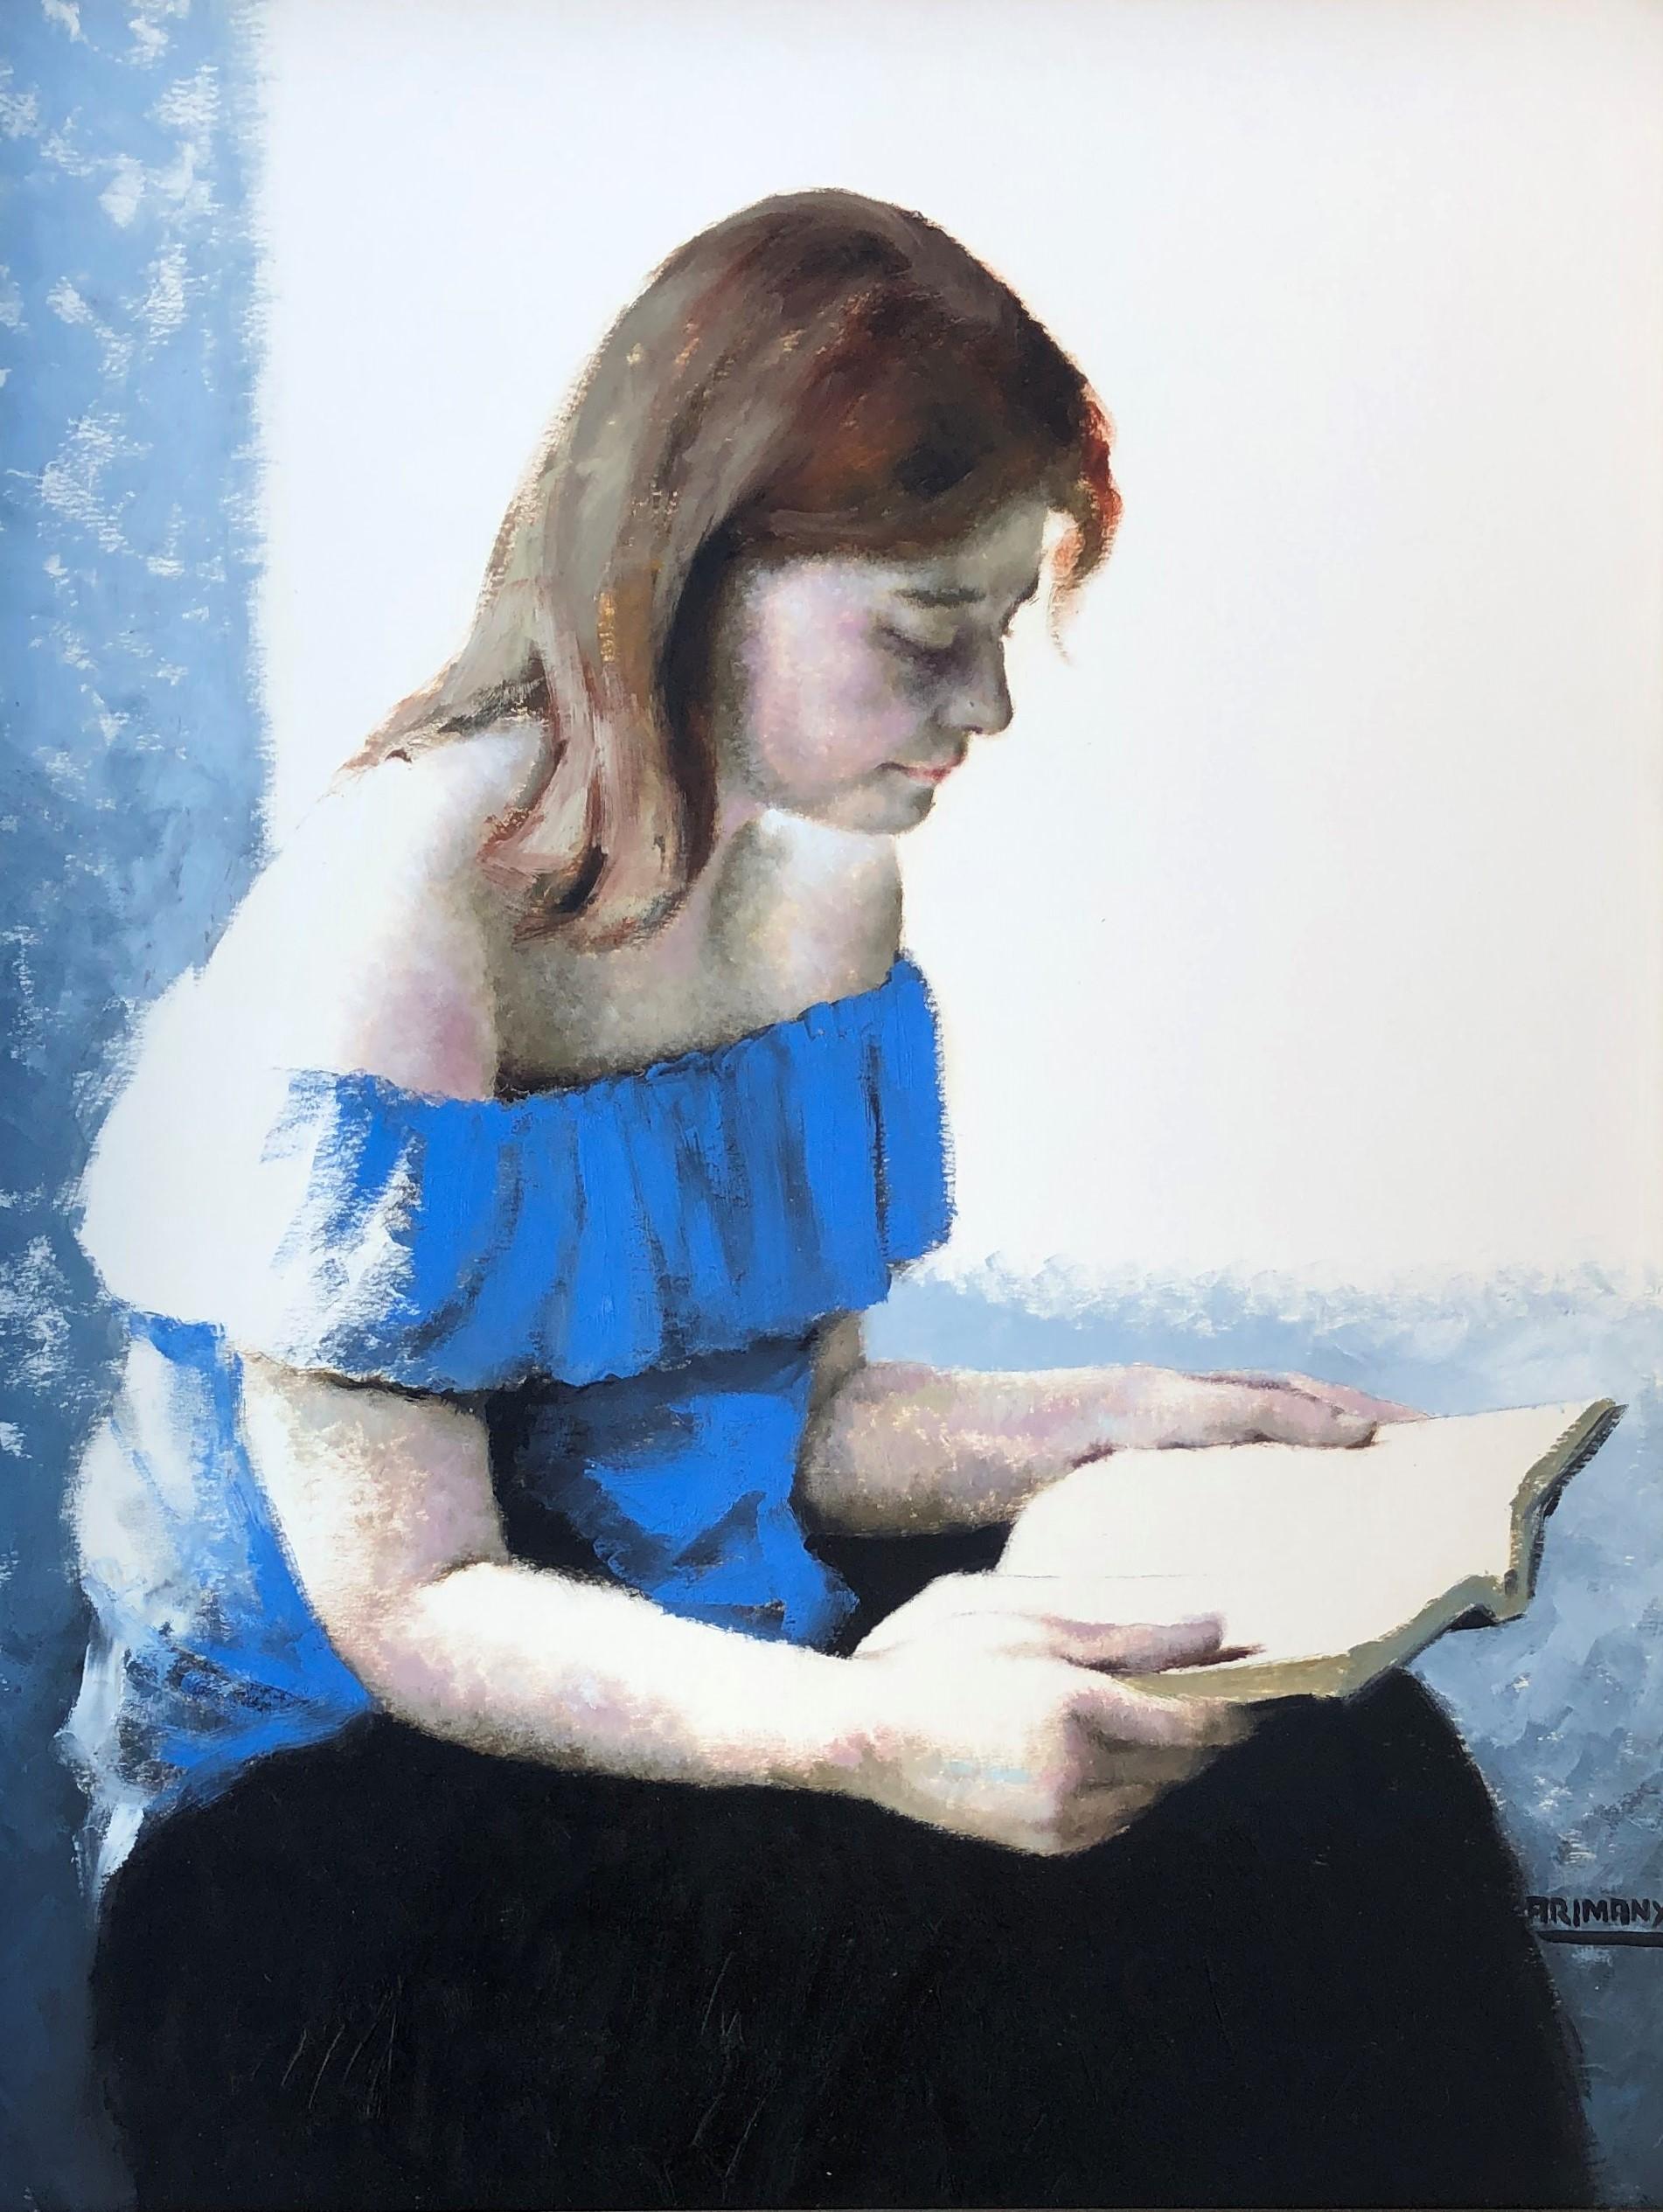 Josep Lluis Arimany Nicolau Portrait Painting - La lectora - "The reader" - Spanish figure oil painting, Jose Arimany original 